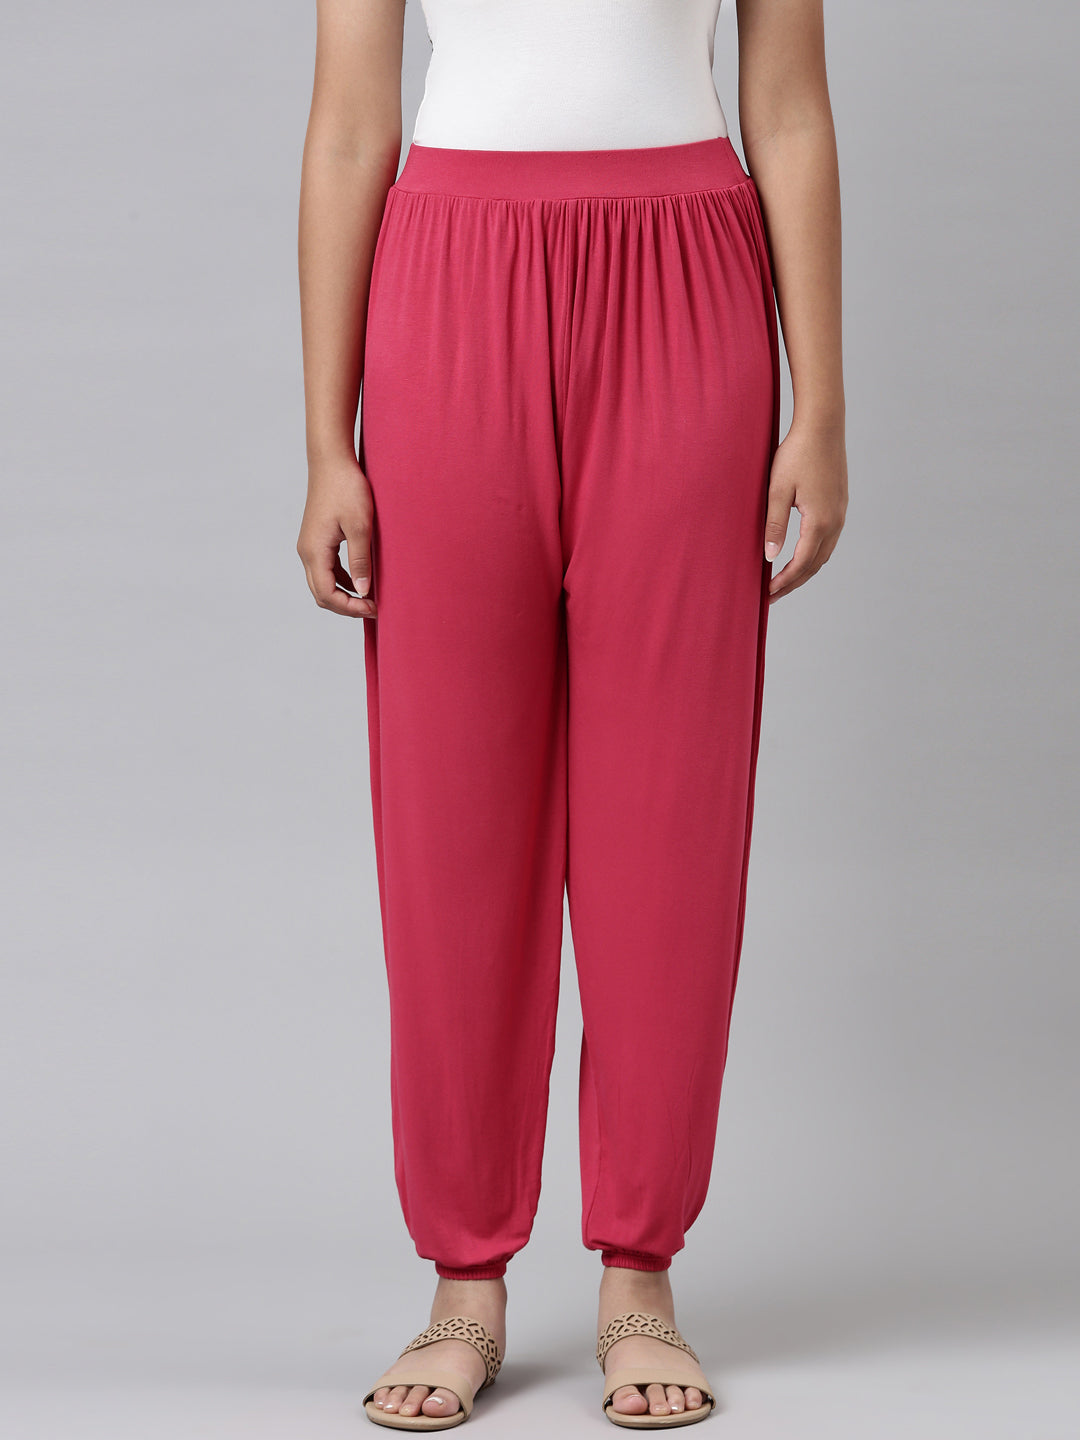 Indian Cotton Harem Gypsy Hippie Ali Baba Baggy Baby Pink Pant Women Yoga  Pants | eBay